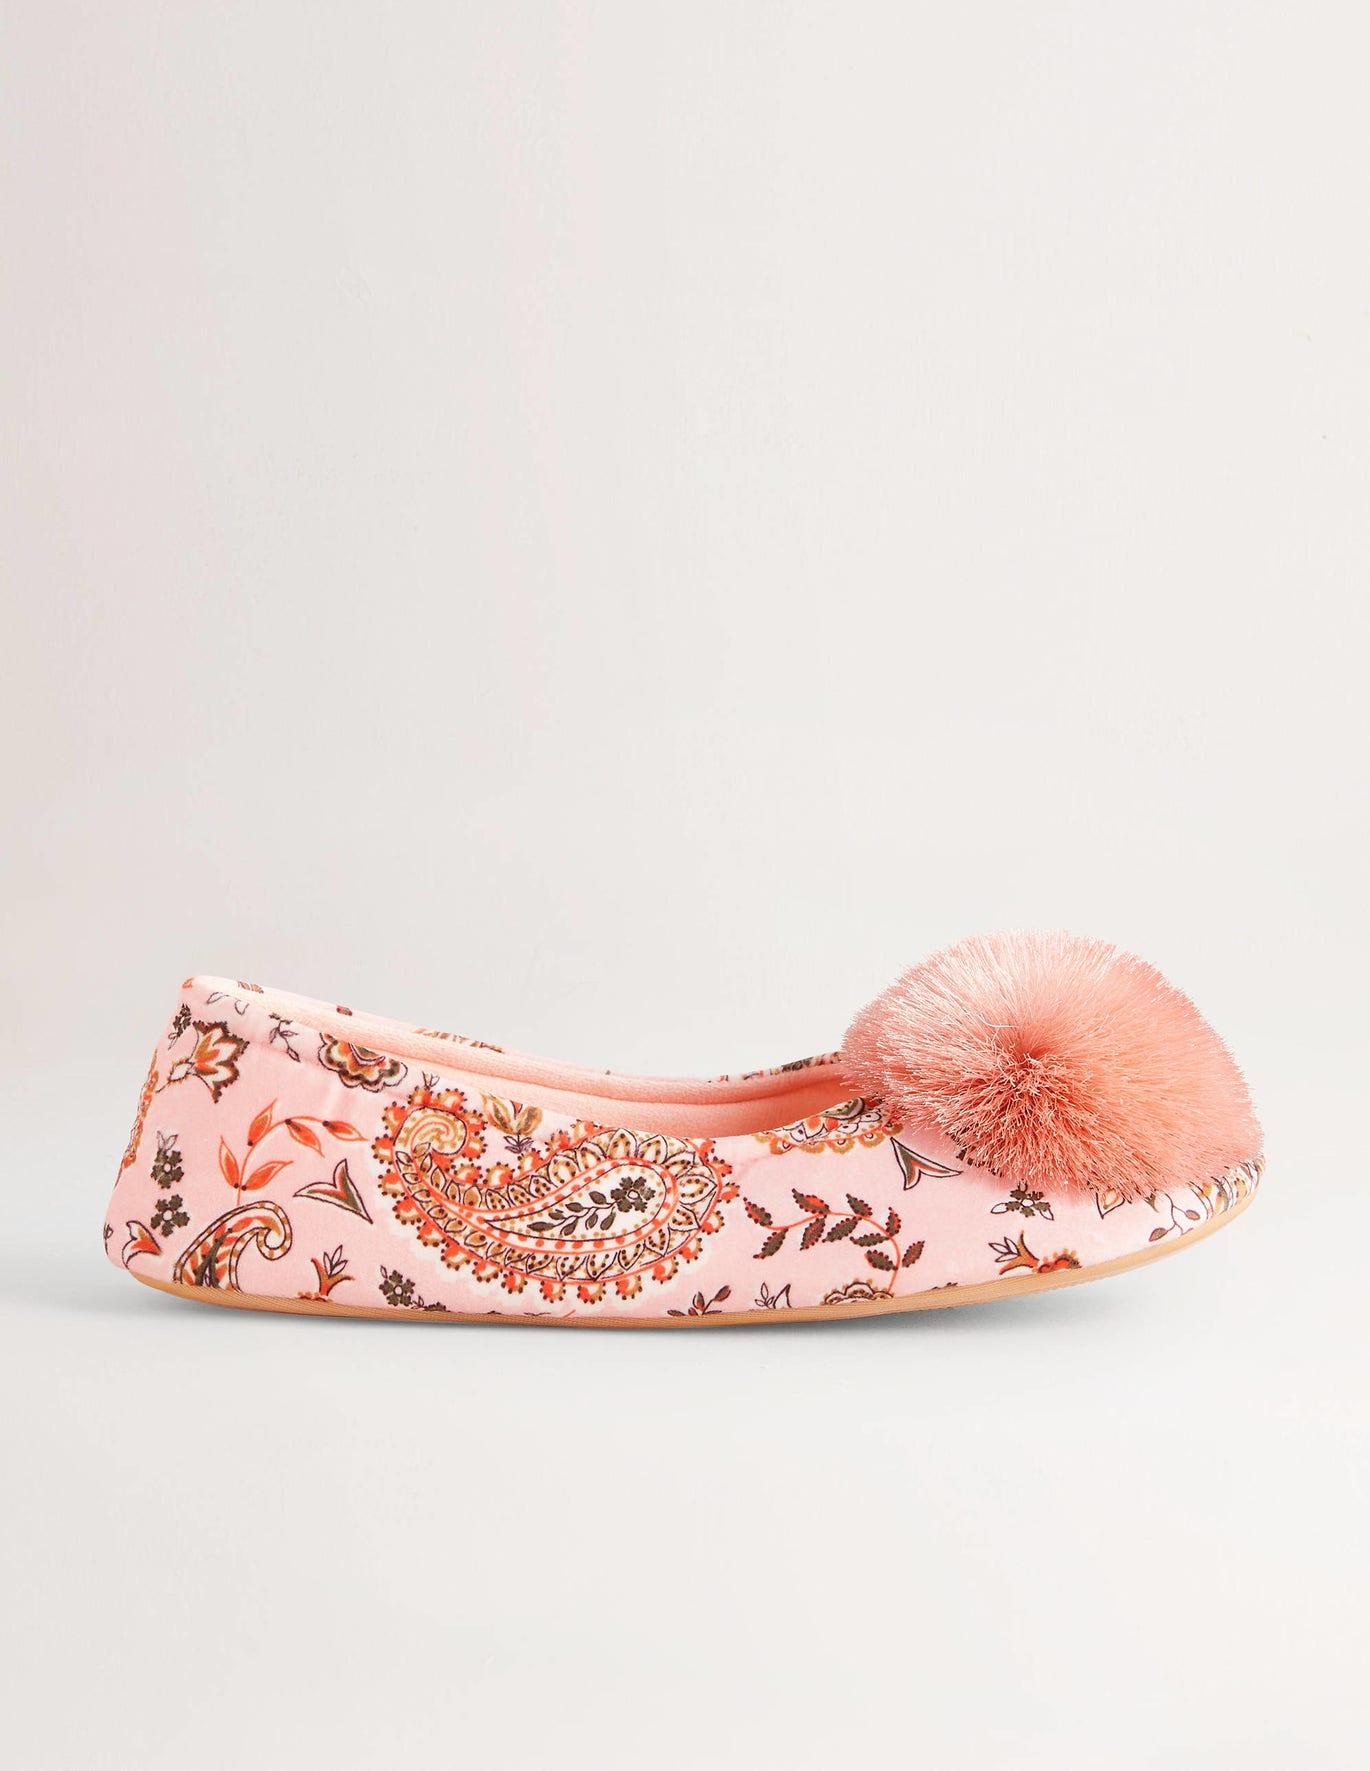 Mini Boden Preloved | Fluffy Cream Lamb Slippers (Size 24)